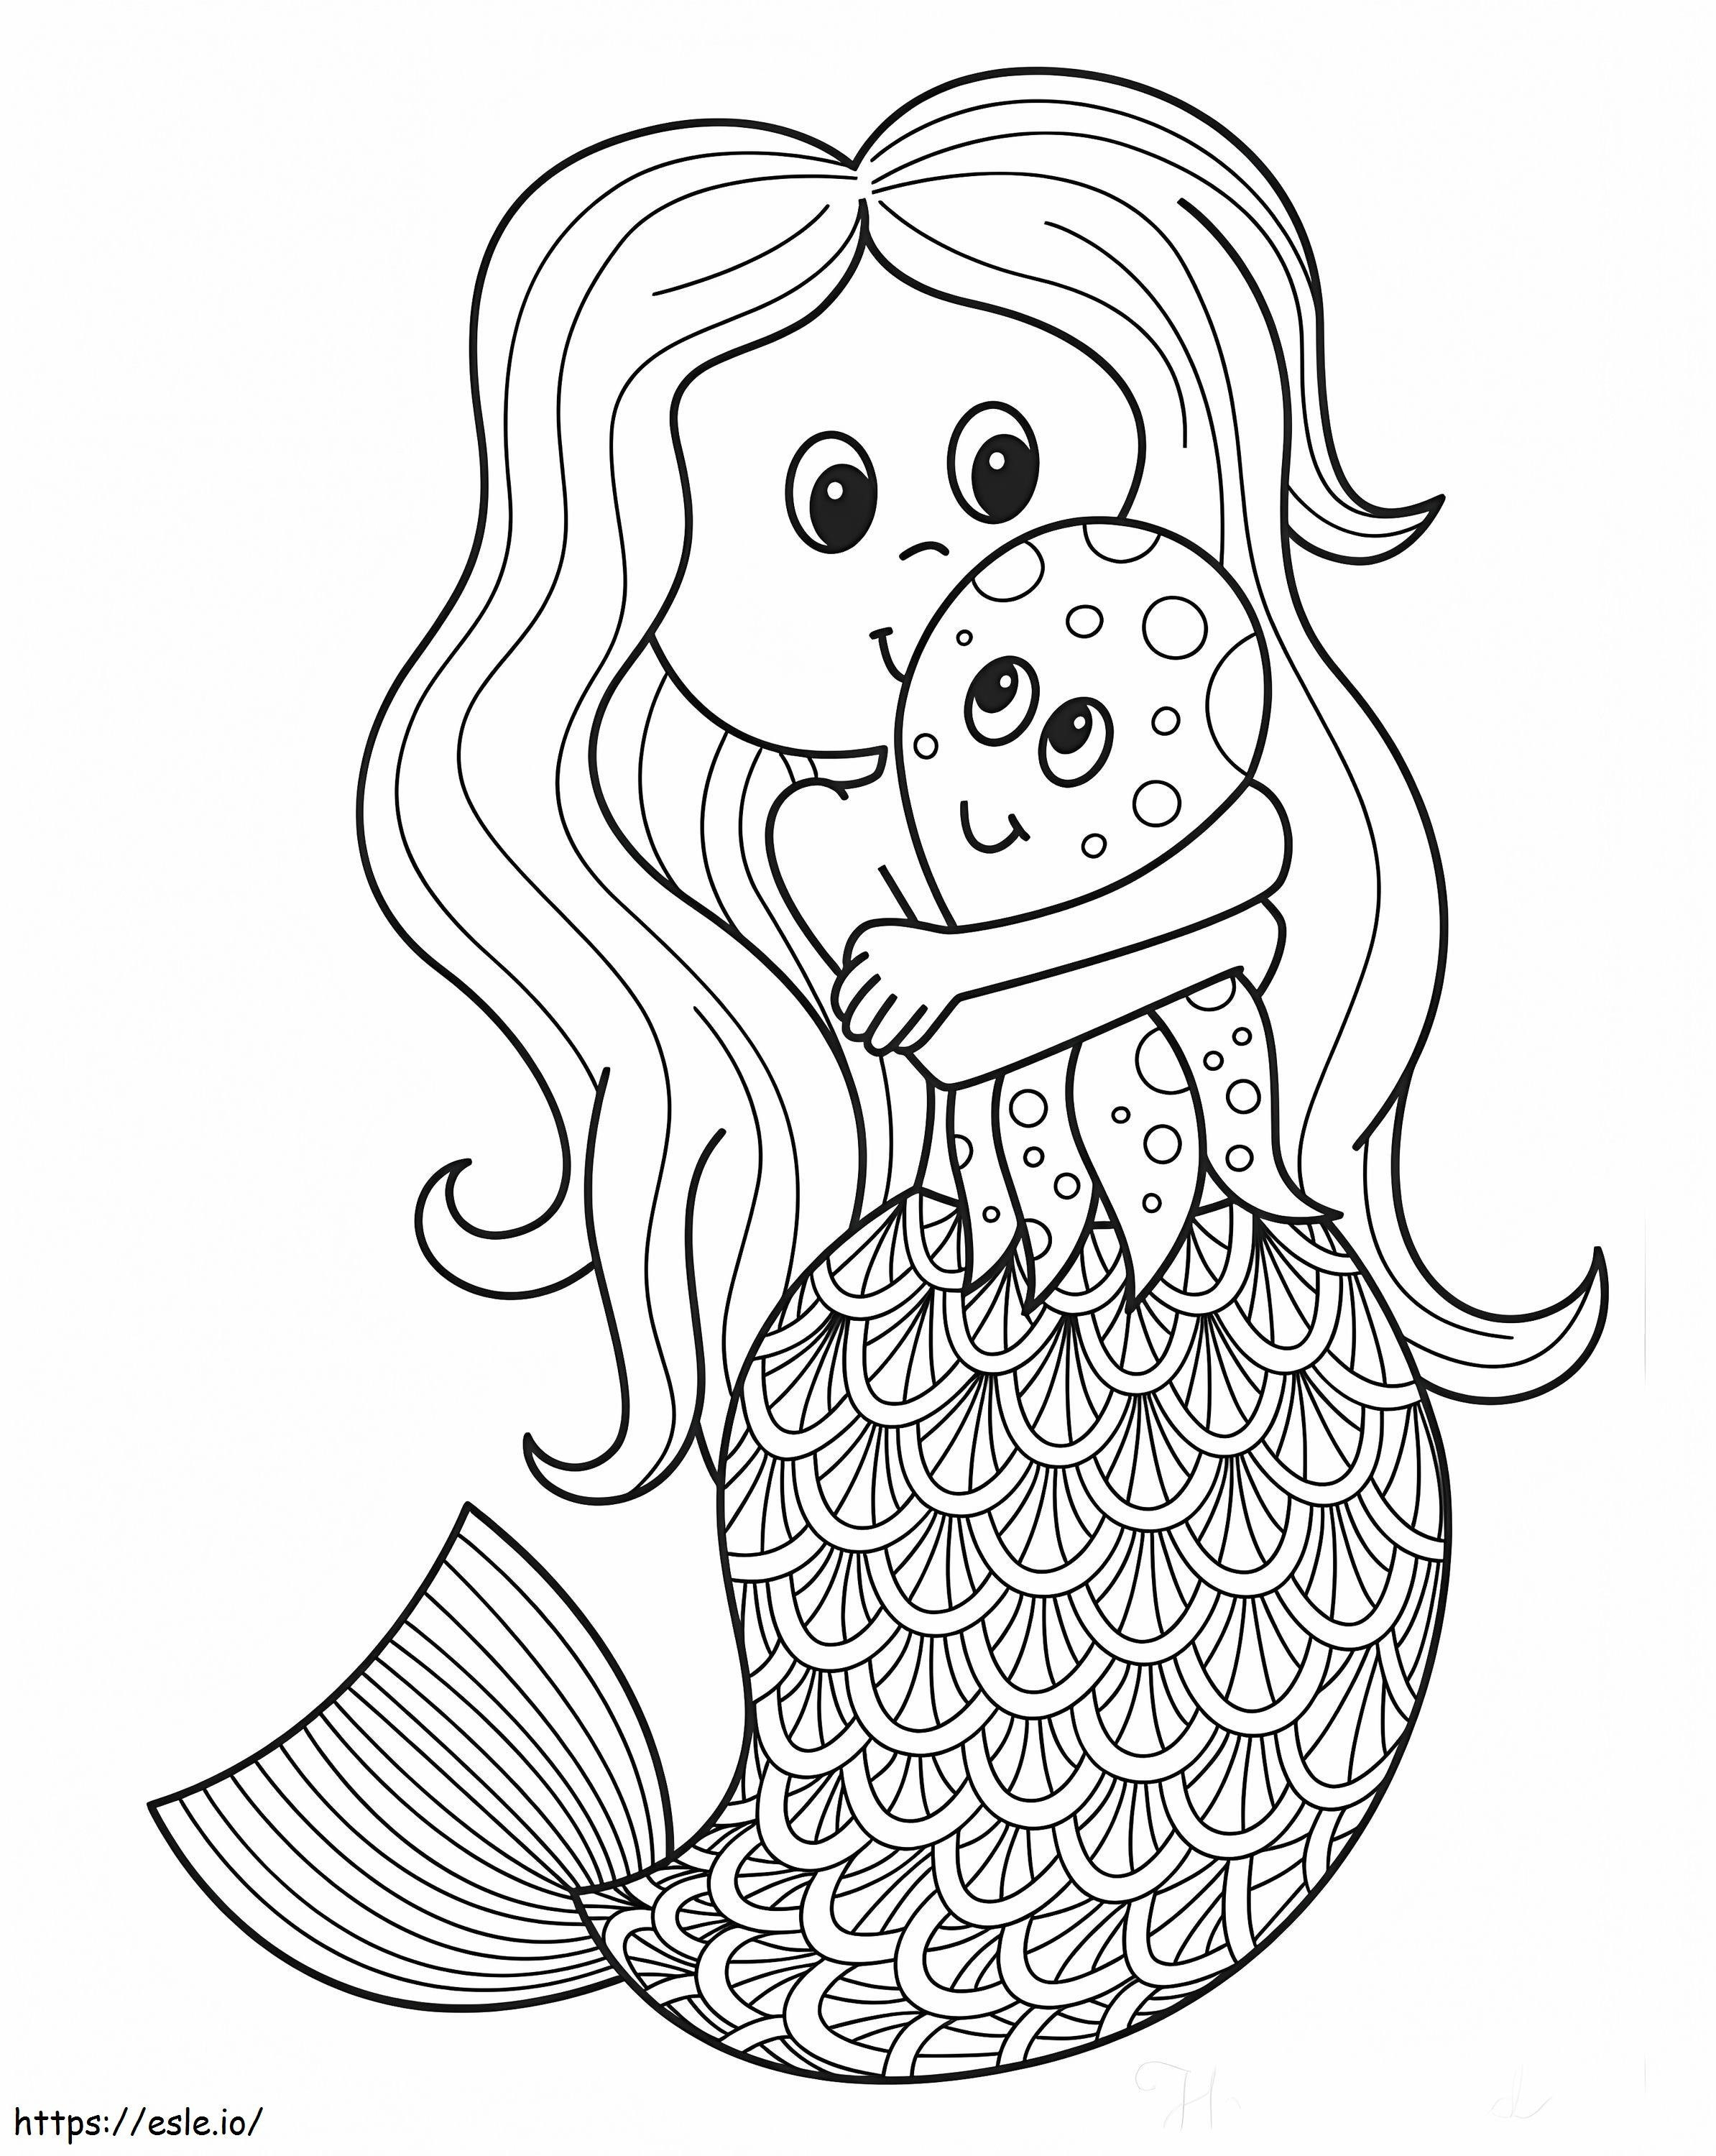 Meerjungfrau und Oktopus ausmalbilder